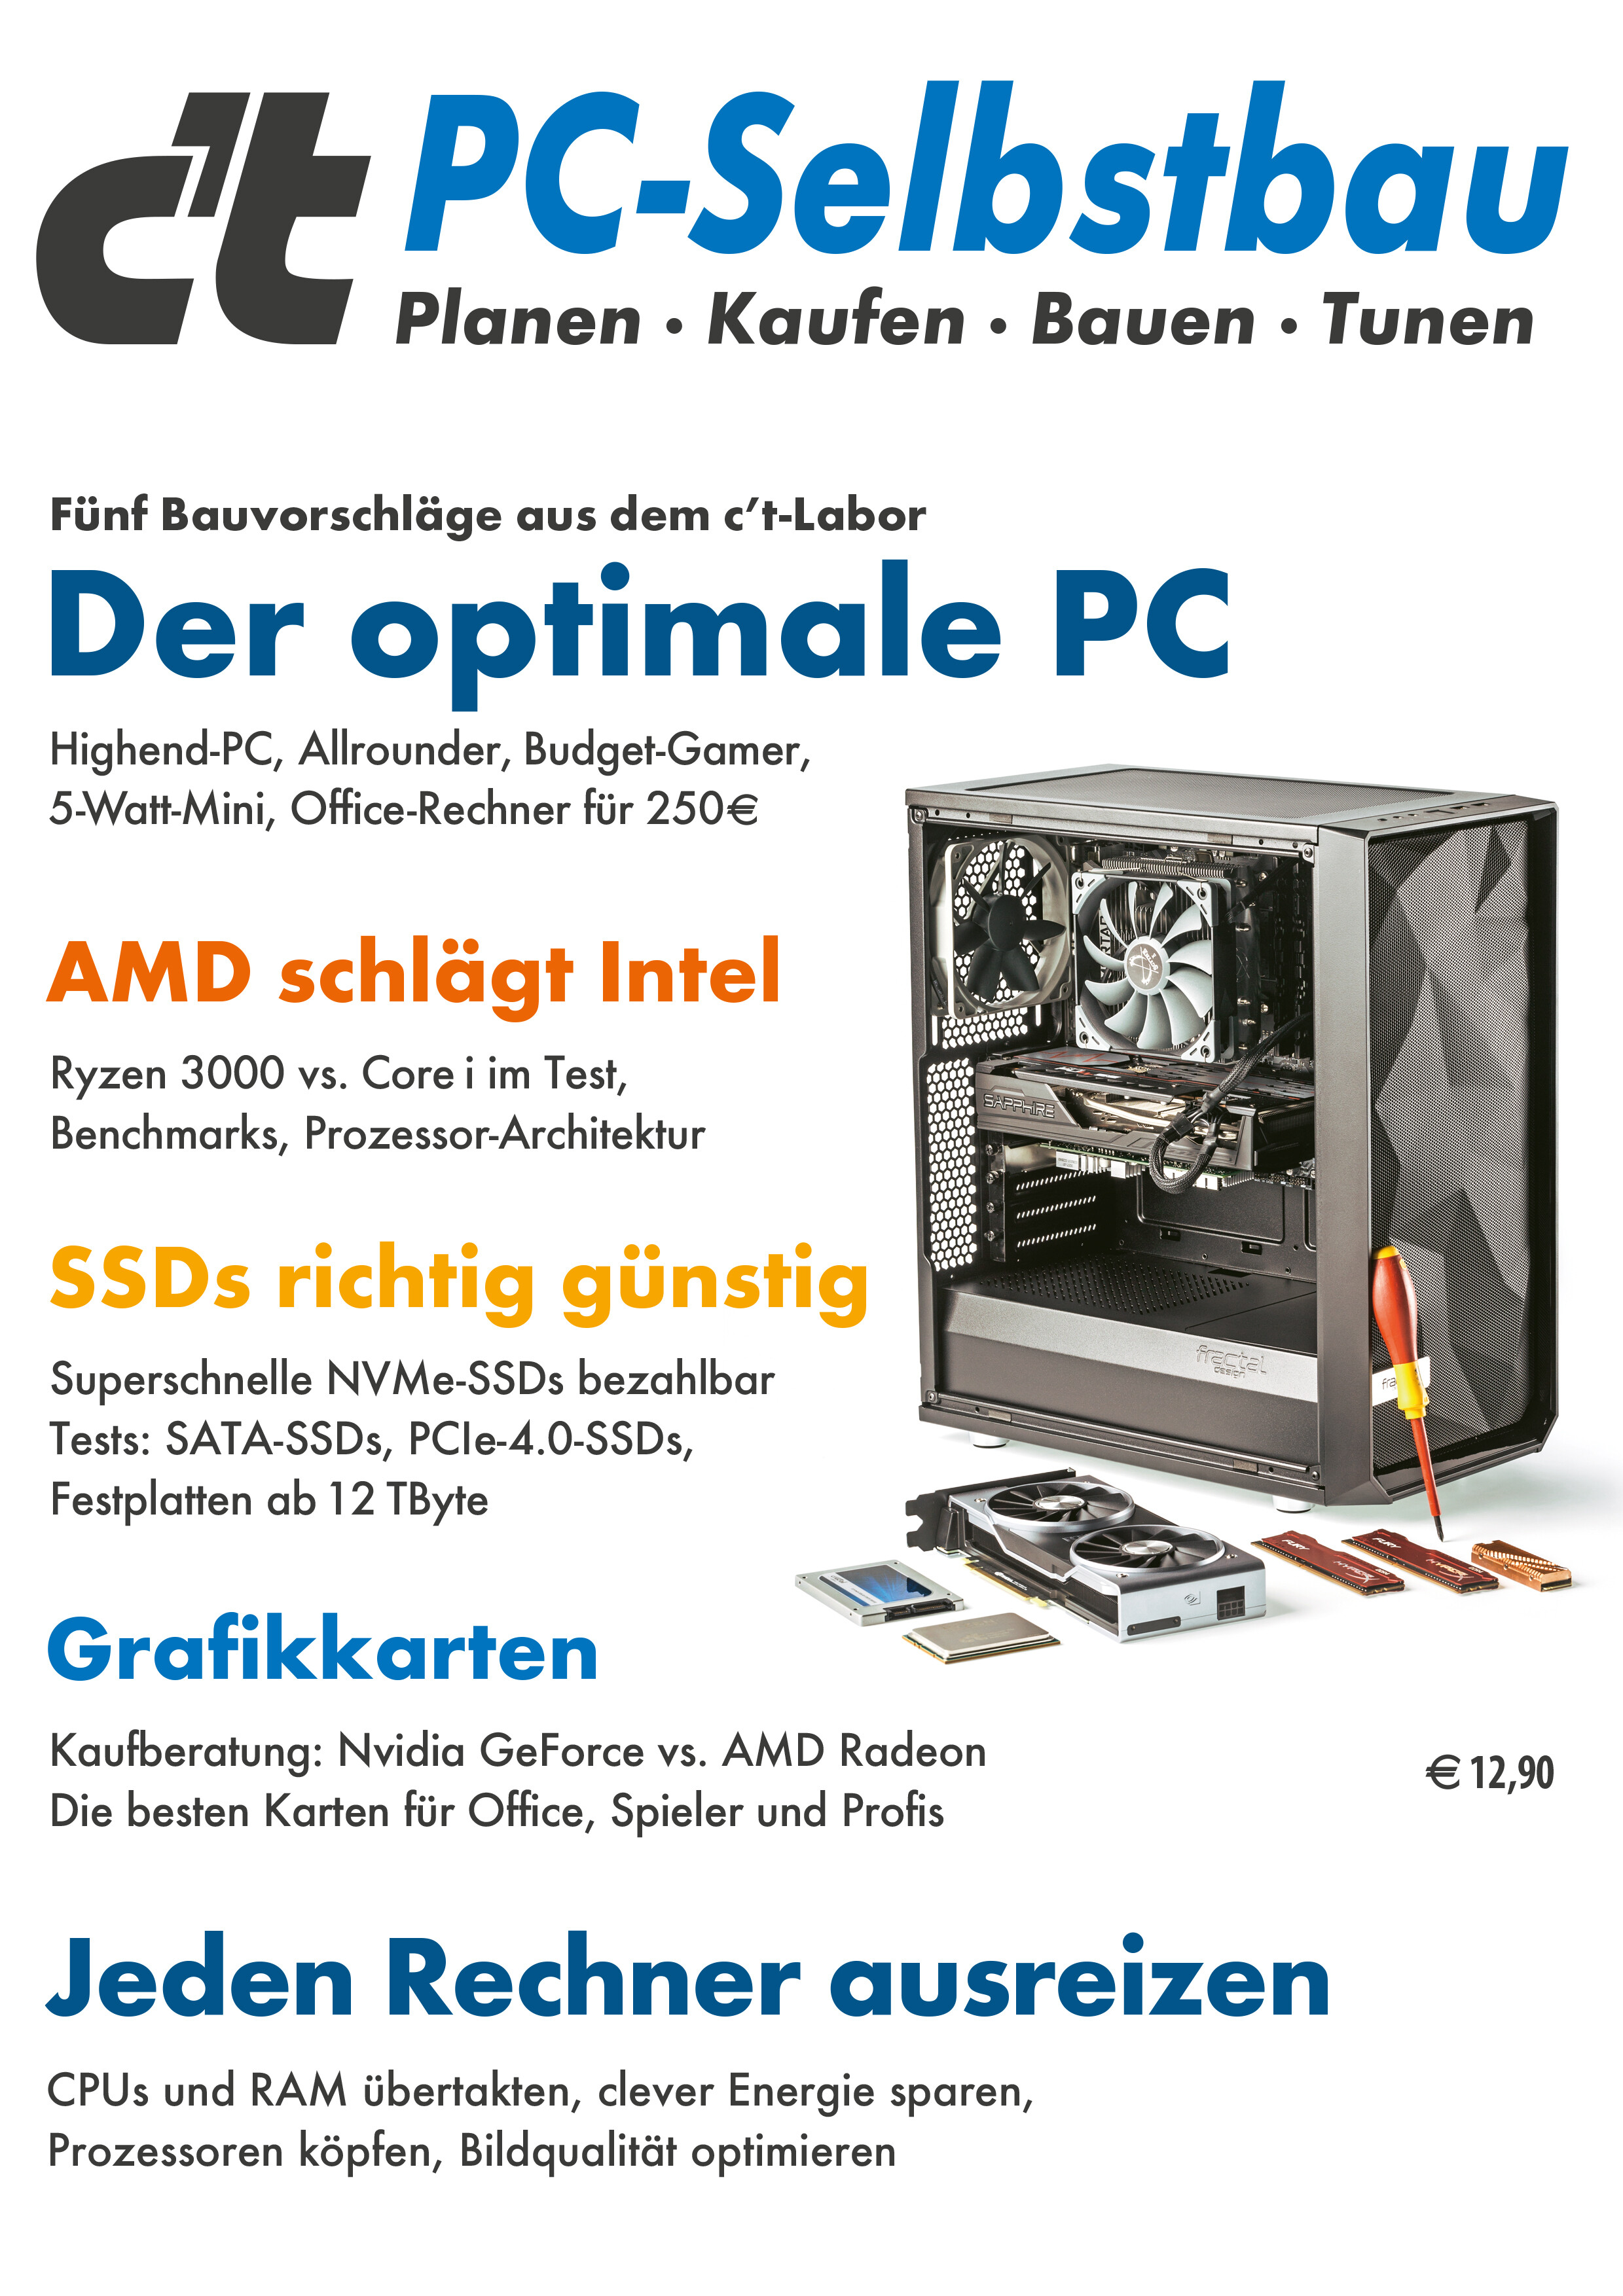 c't PC-Selbstbau 2019